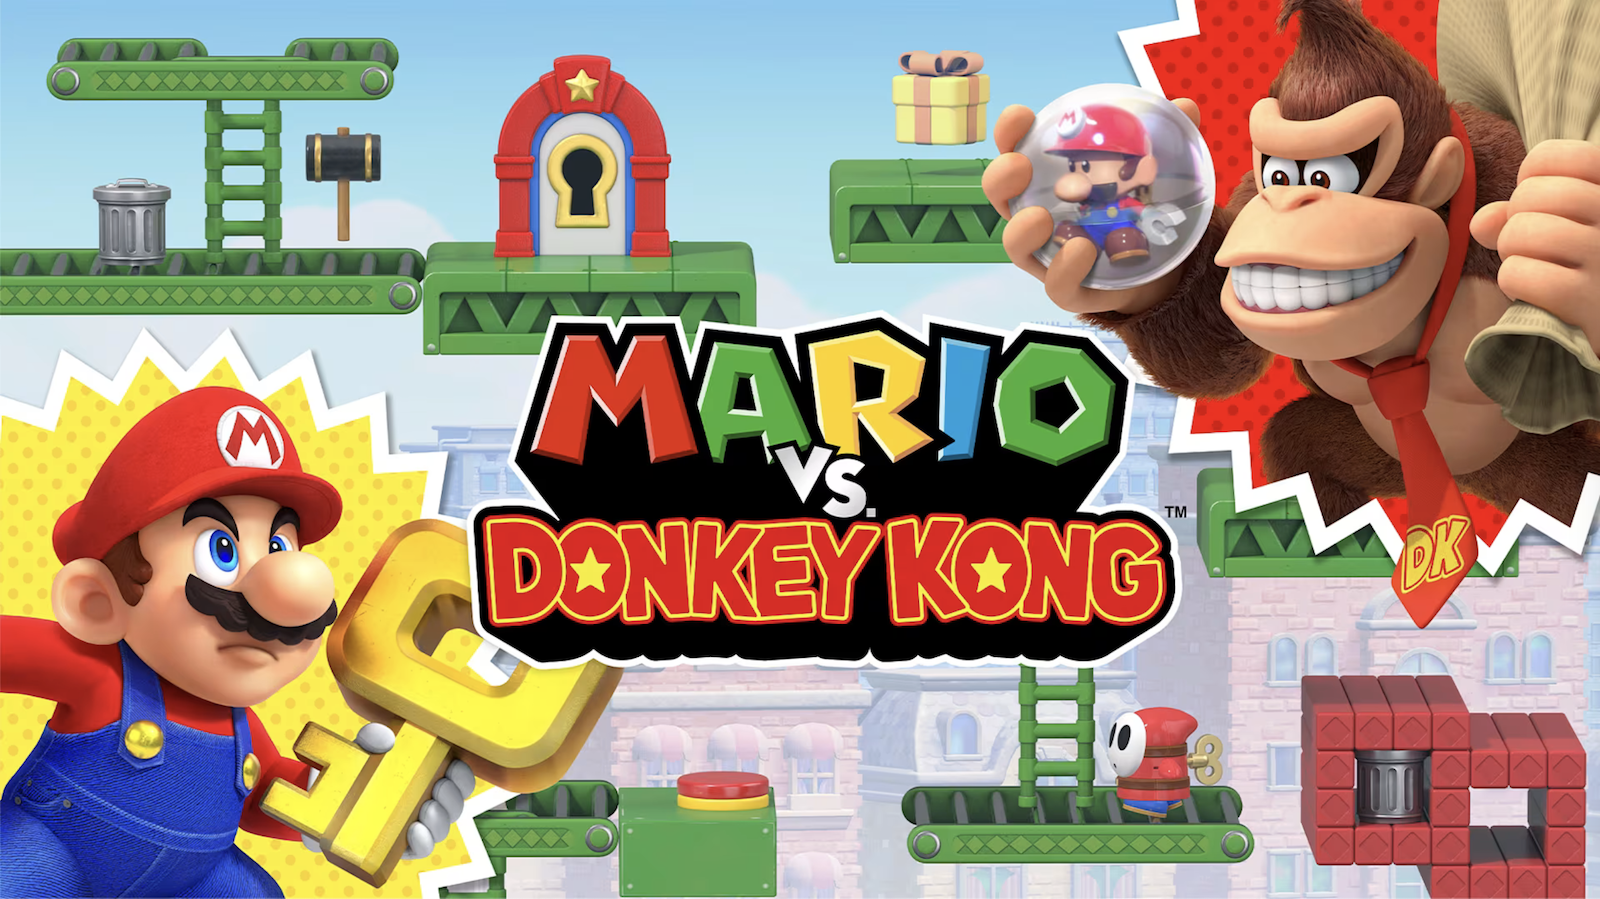 Mario vs Donkey Kong feature image